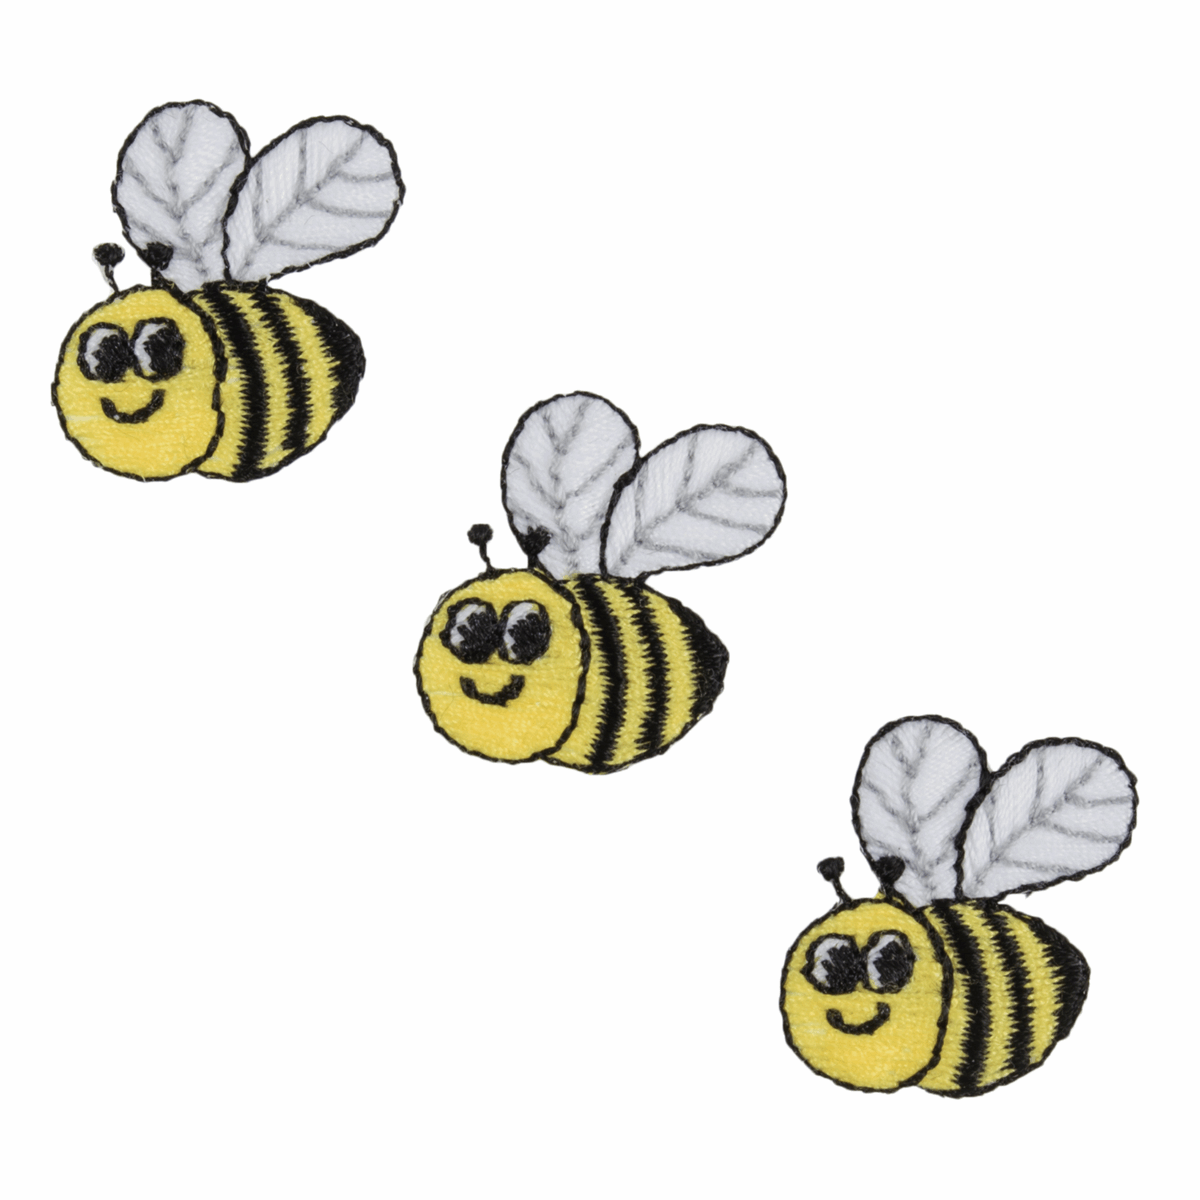 Motif A: Three Bees